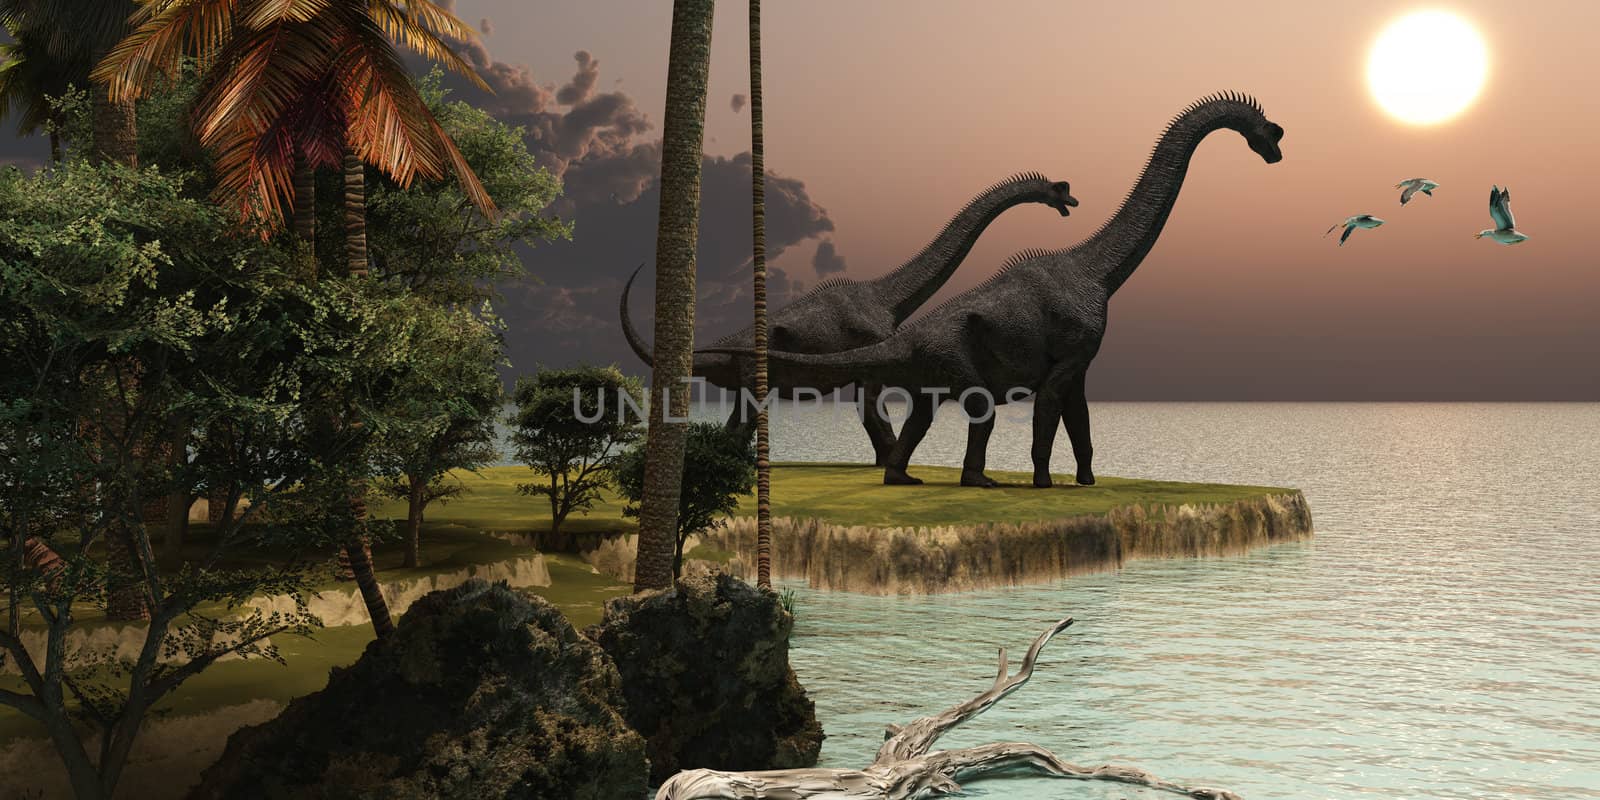 Two Brachiosaurus dinosaurs enjoy a beautiful sunset.